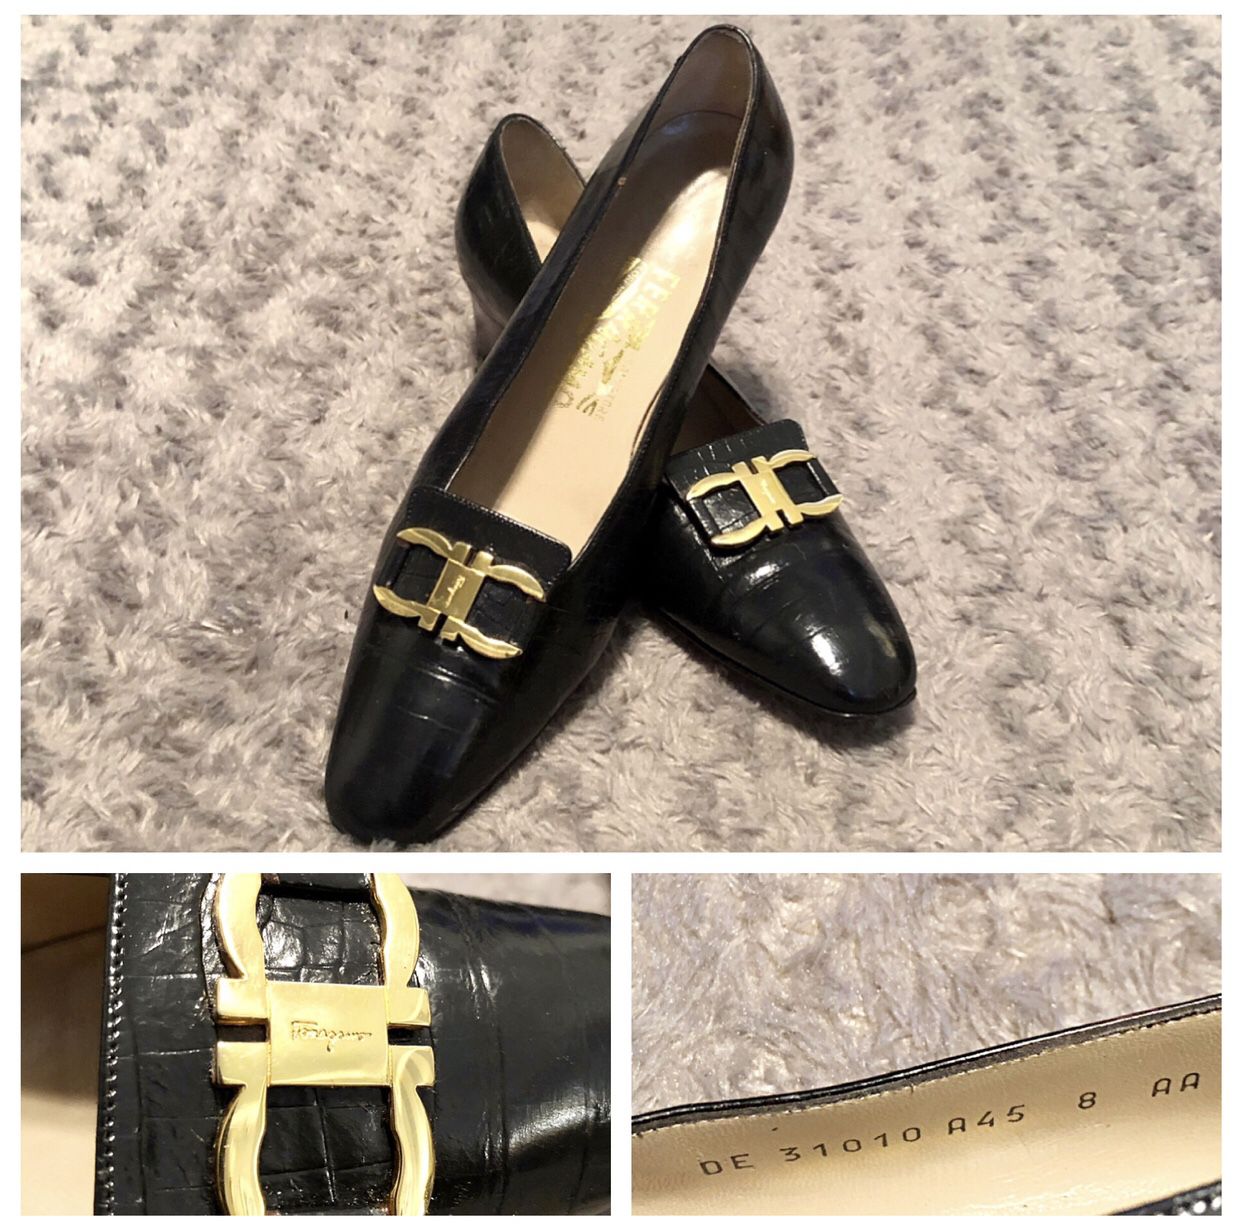 Salvatore Ferragamo heels paid $695 Size 8 Black Crocodile, Heel height approx. 2", Black croc embossed, Gold hardware, No box or dust bag. Very good